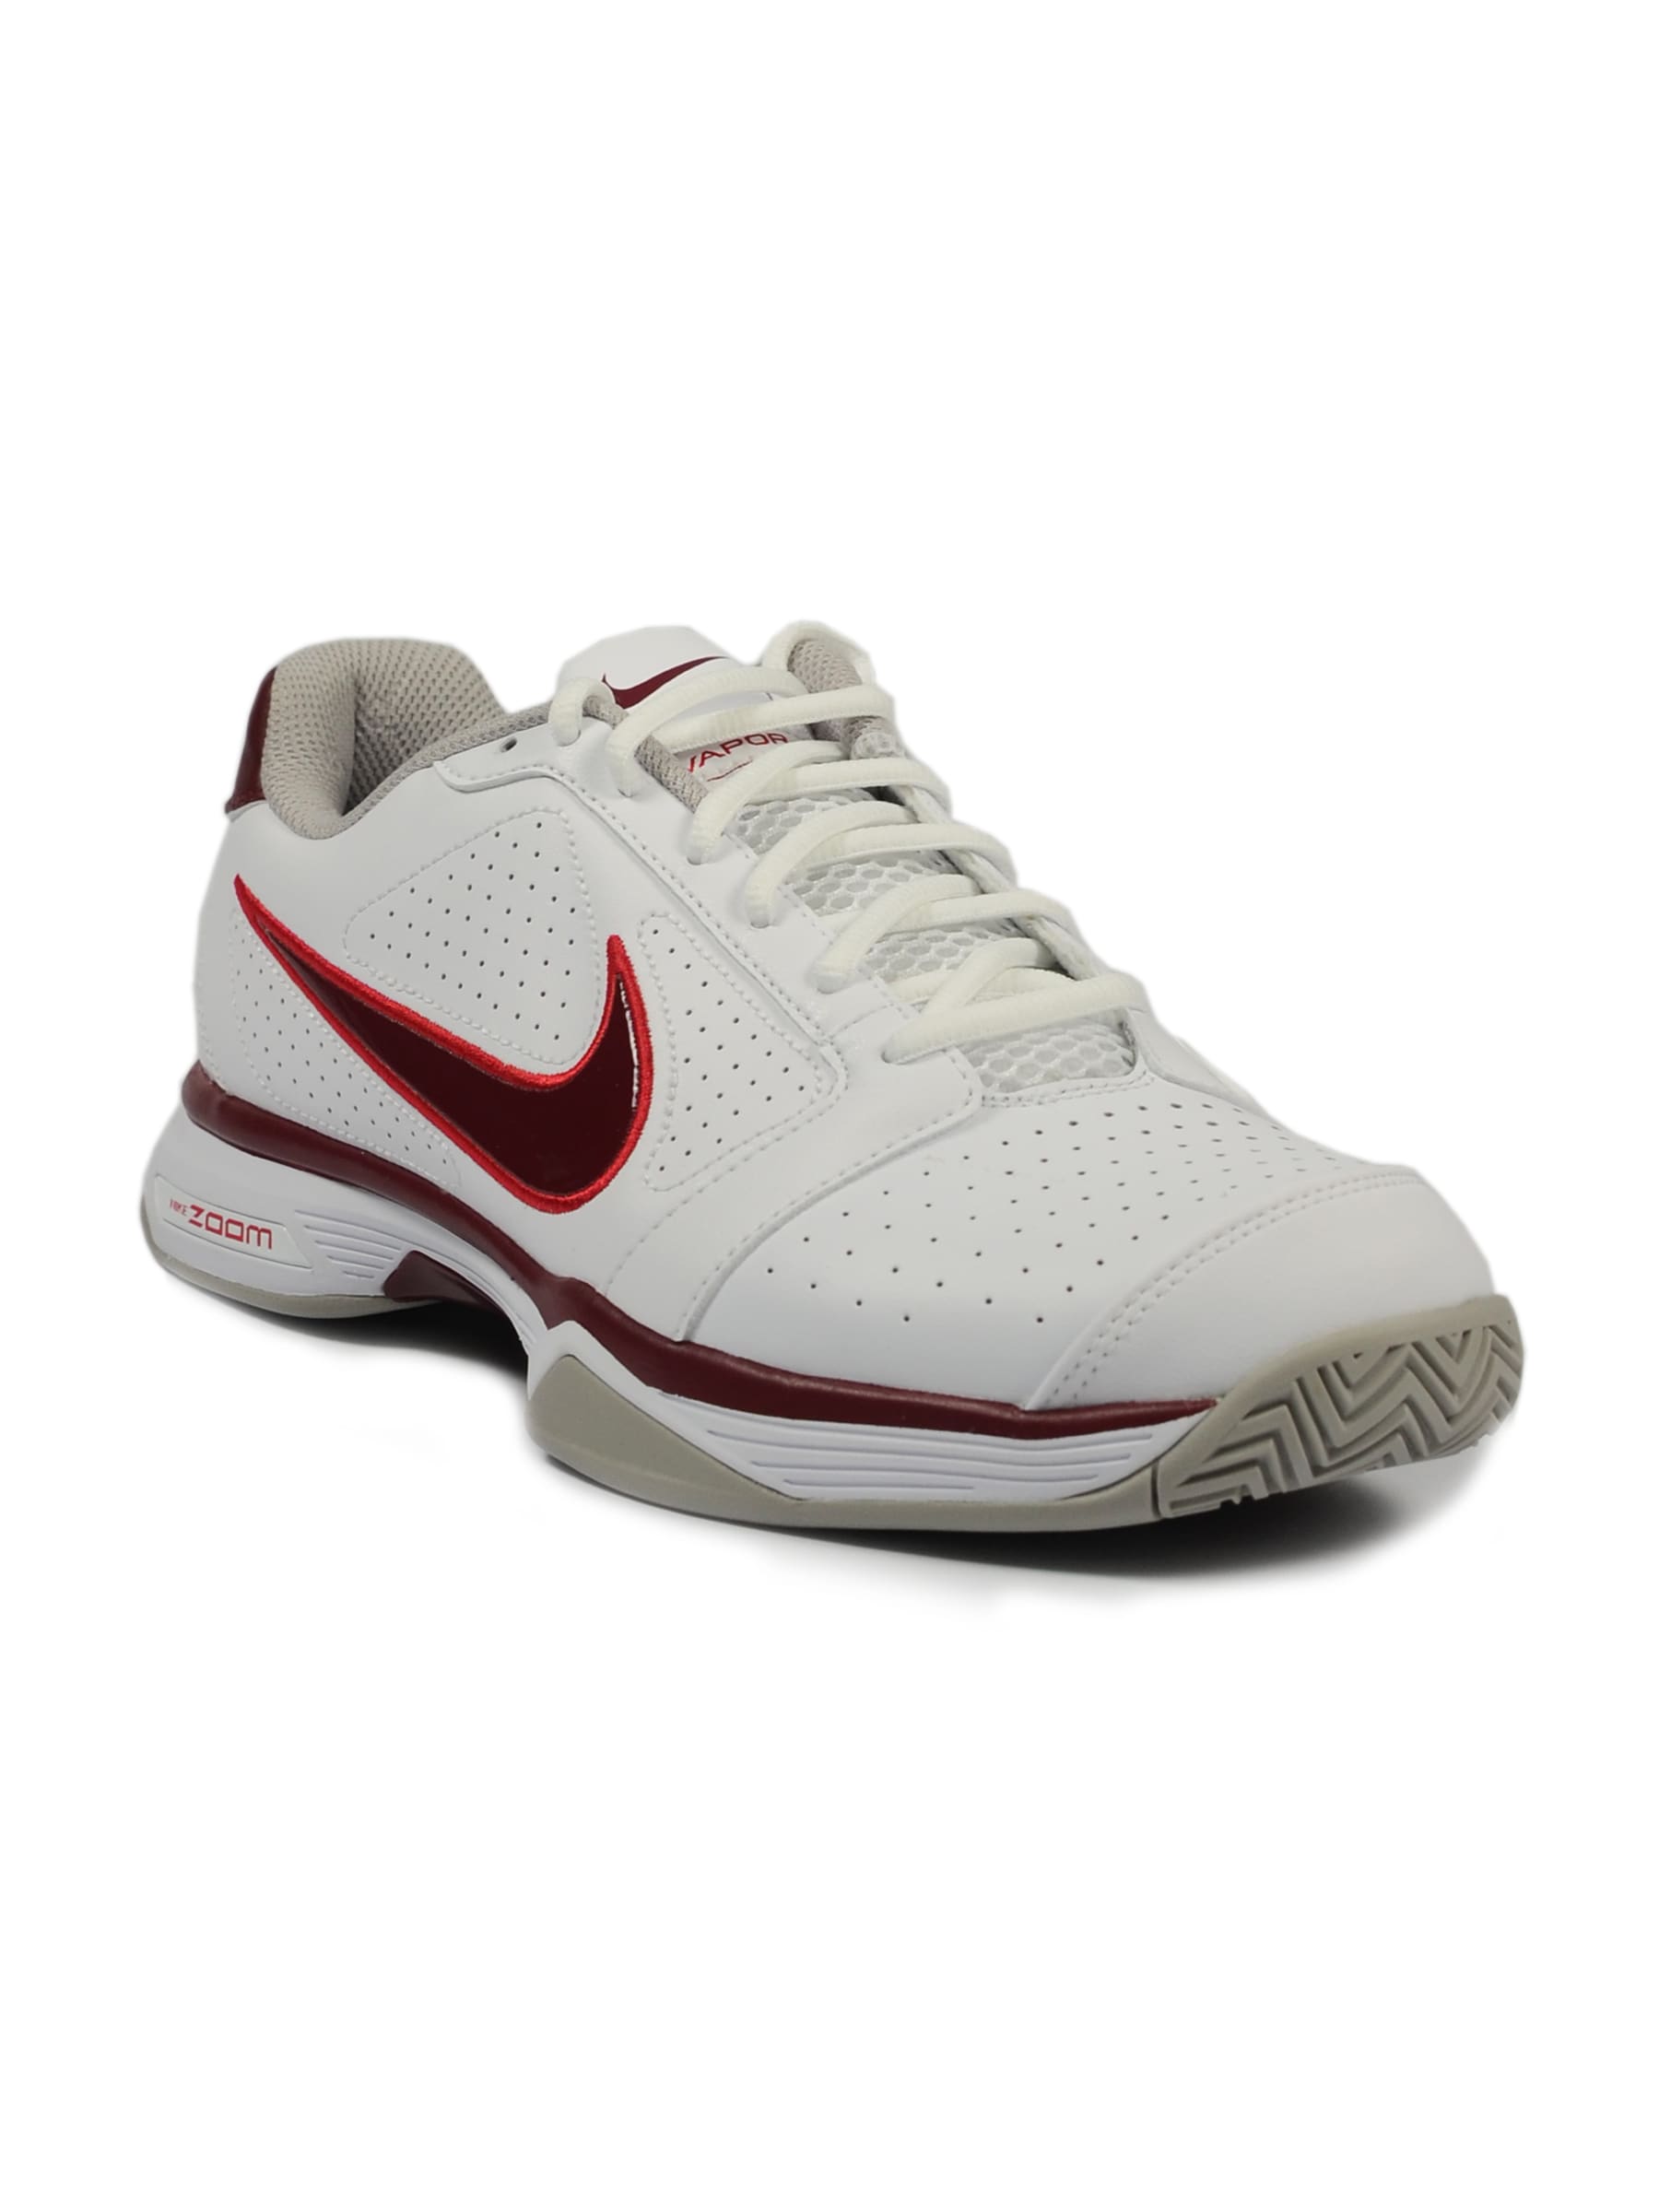 Nike Men Zoom Vapor 8 White Red Shoe